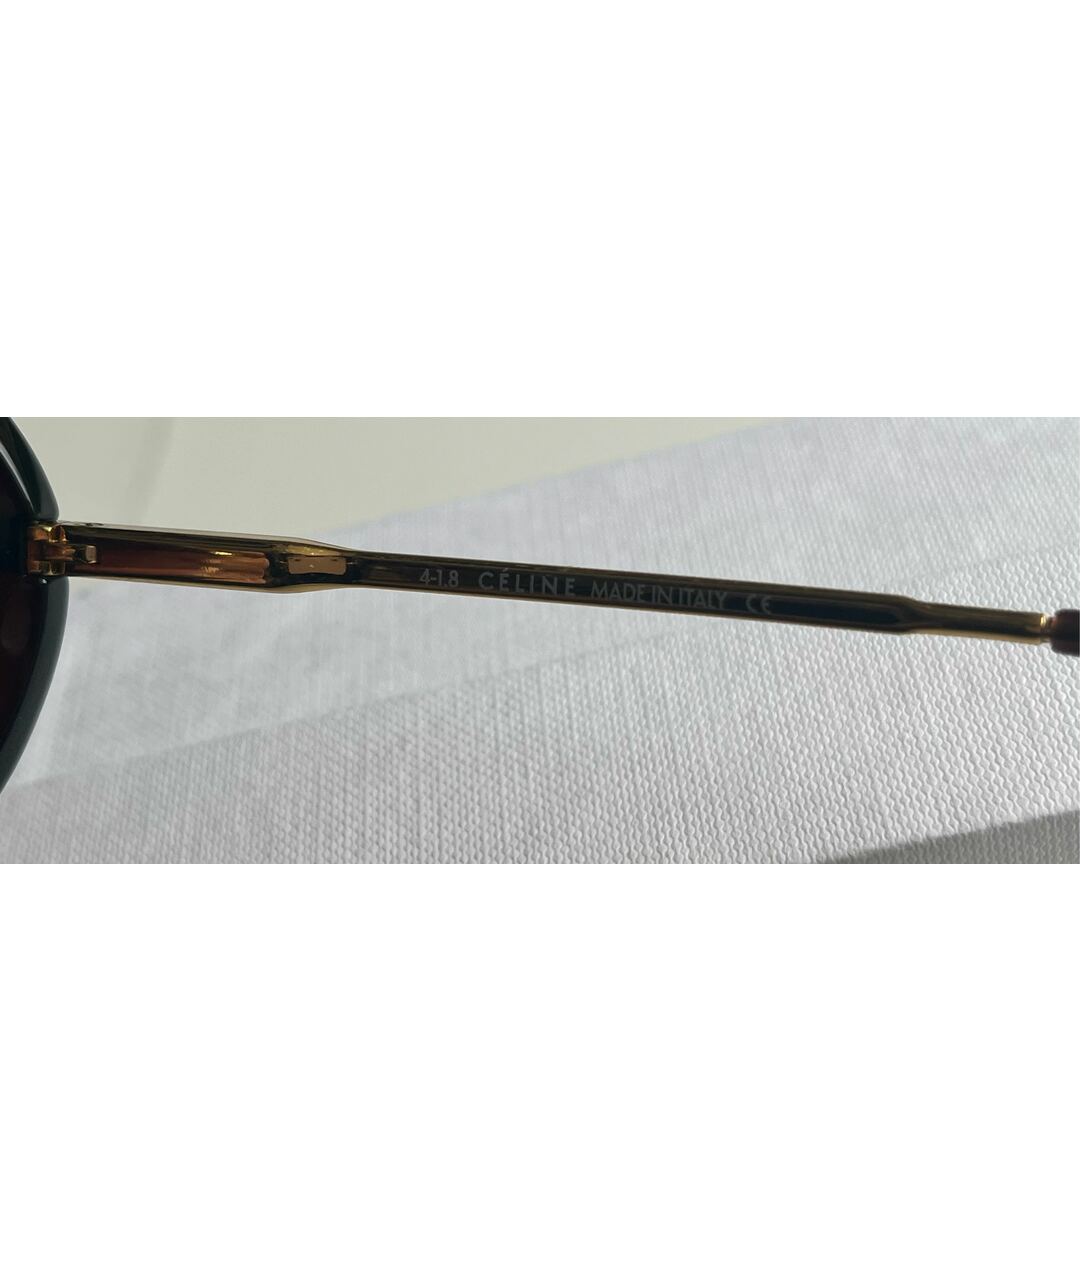 CELINE PRE-OWNED Коричневые солнцезащитные очки, фото 5